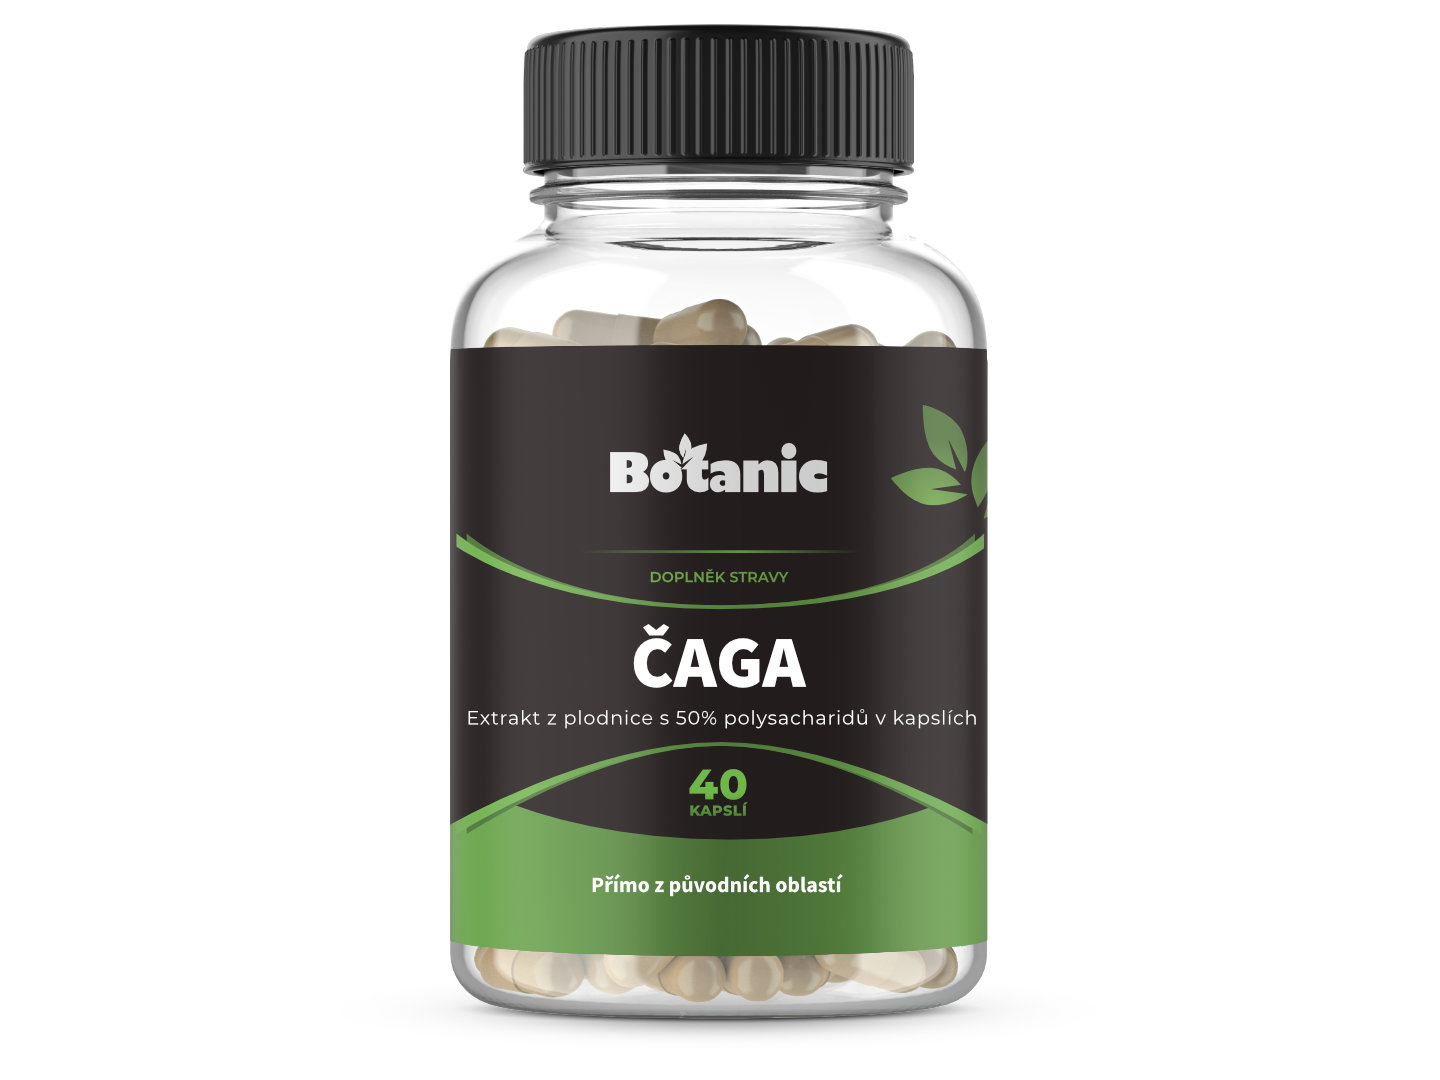 Botanic Čaga - Extrakt z plodnice s 50% polysacharidů v kapslích 40kap.